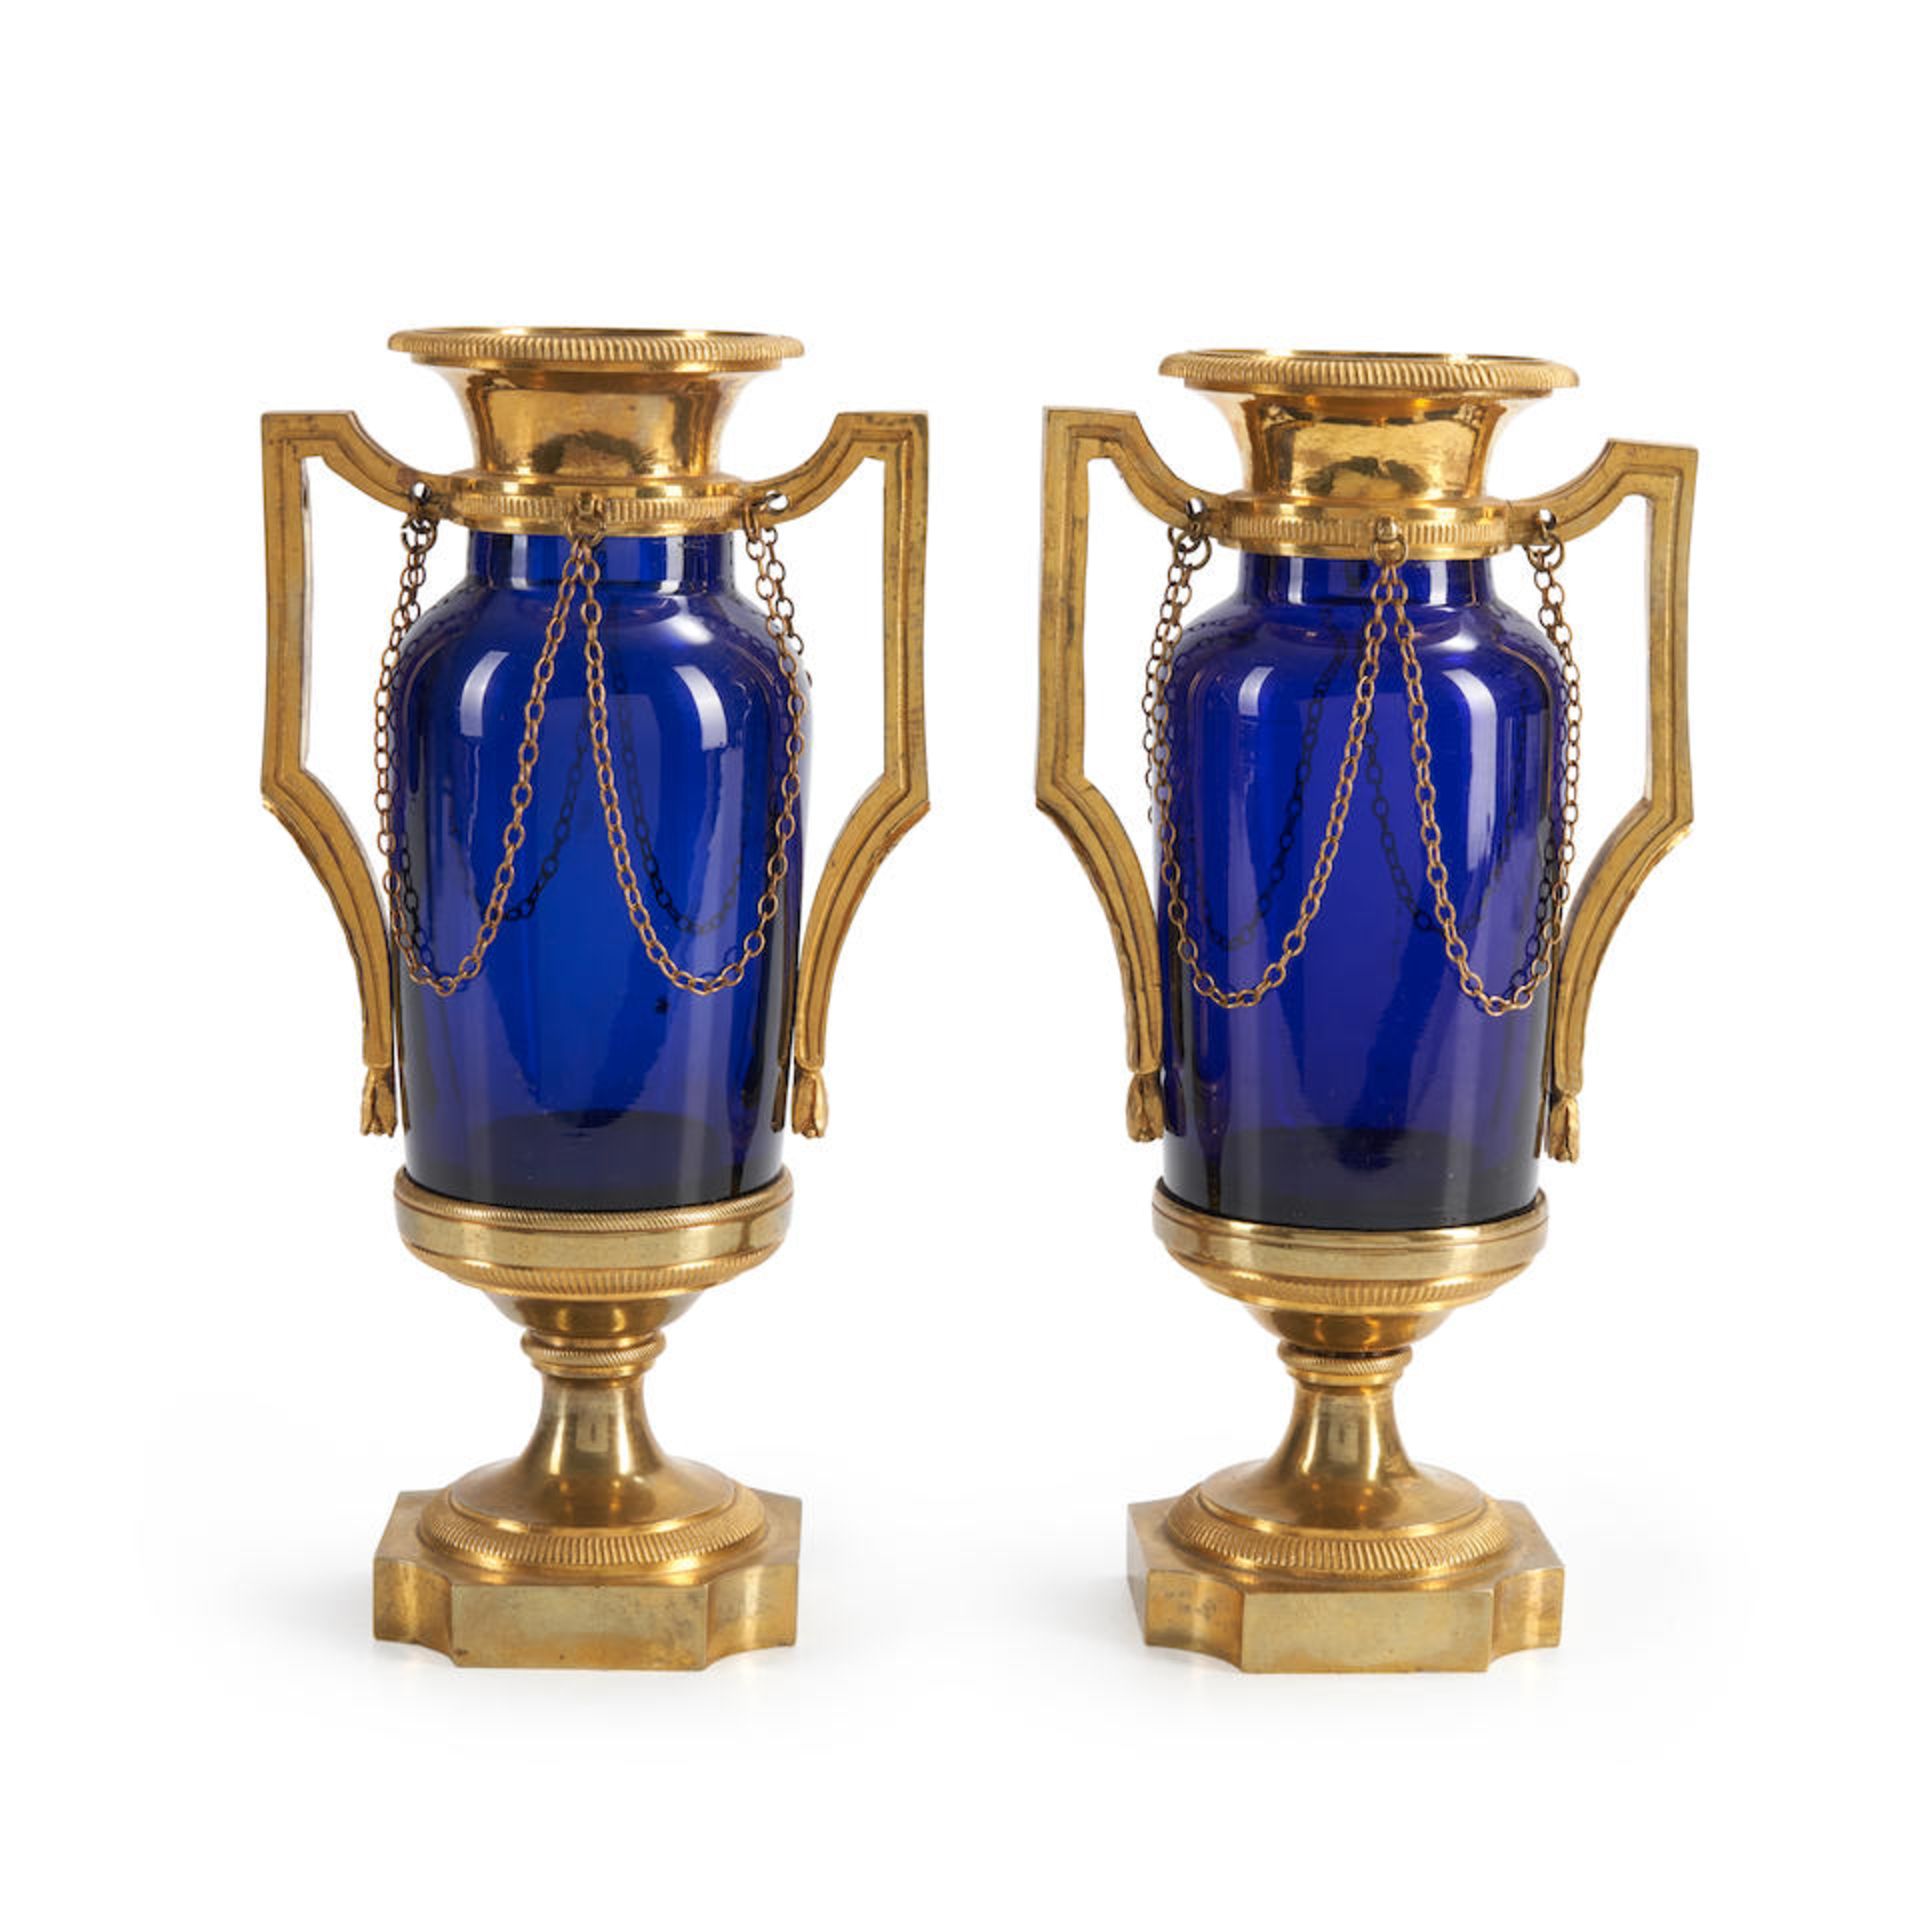 Pair of Louis XVI Ormolu Mounted Cobalt Glass Vases, France, late 18th century.